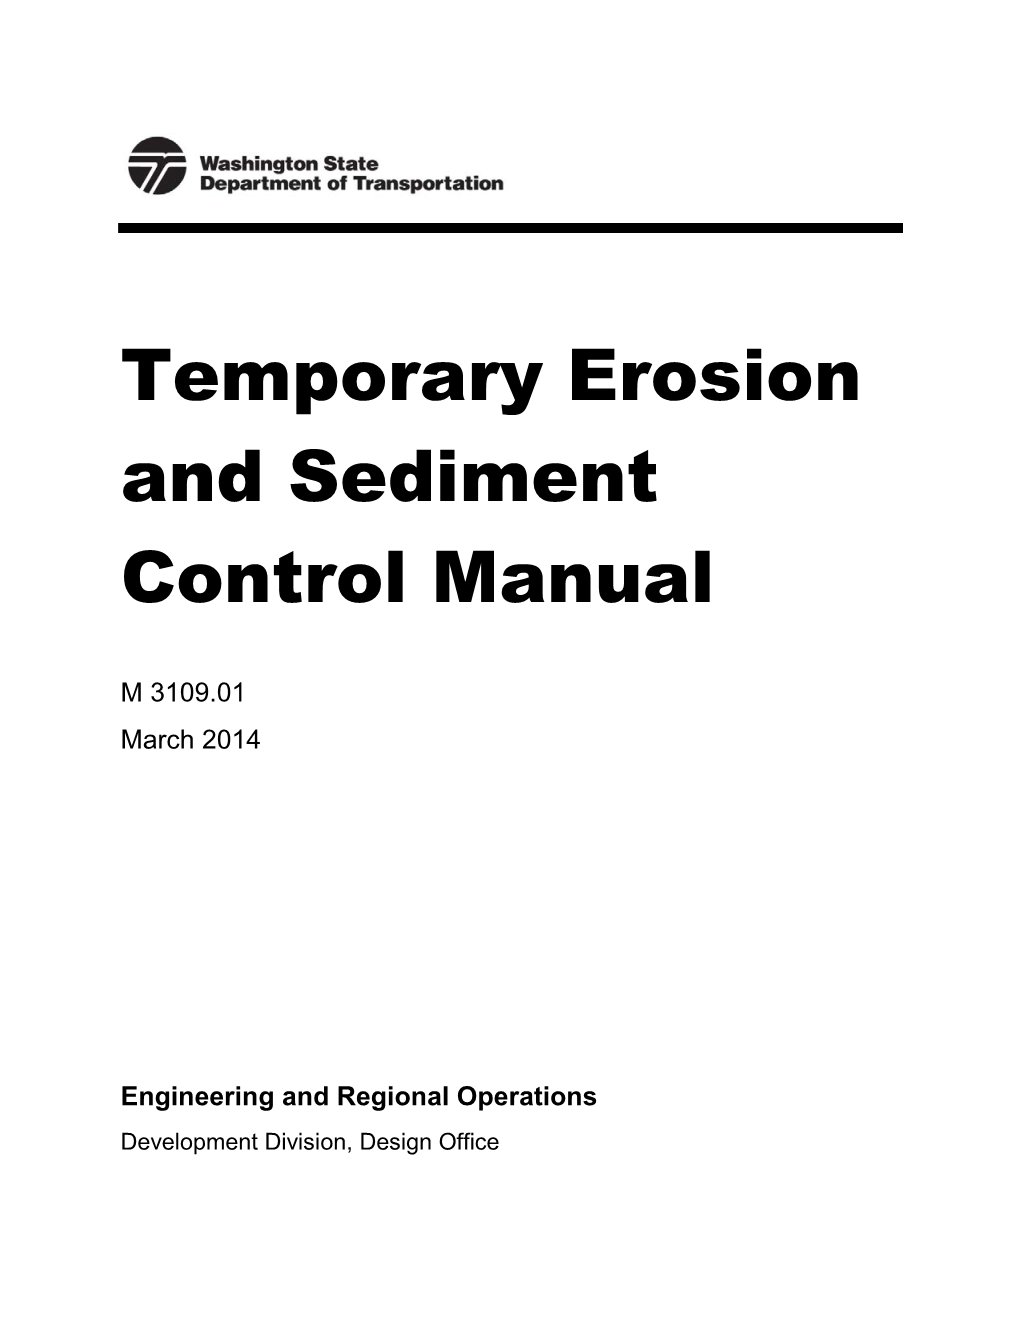 Temporary Erosion and Sediment Control Manual